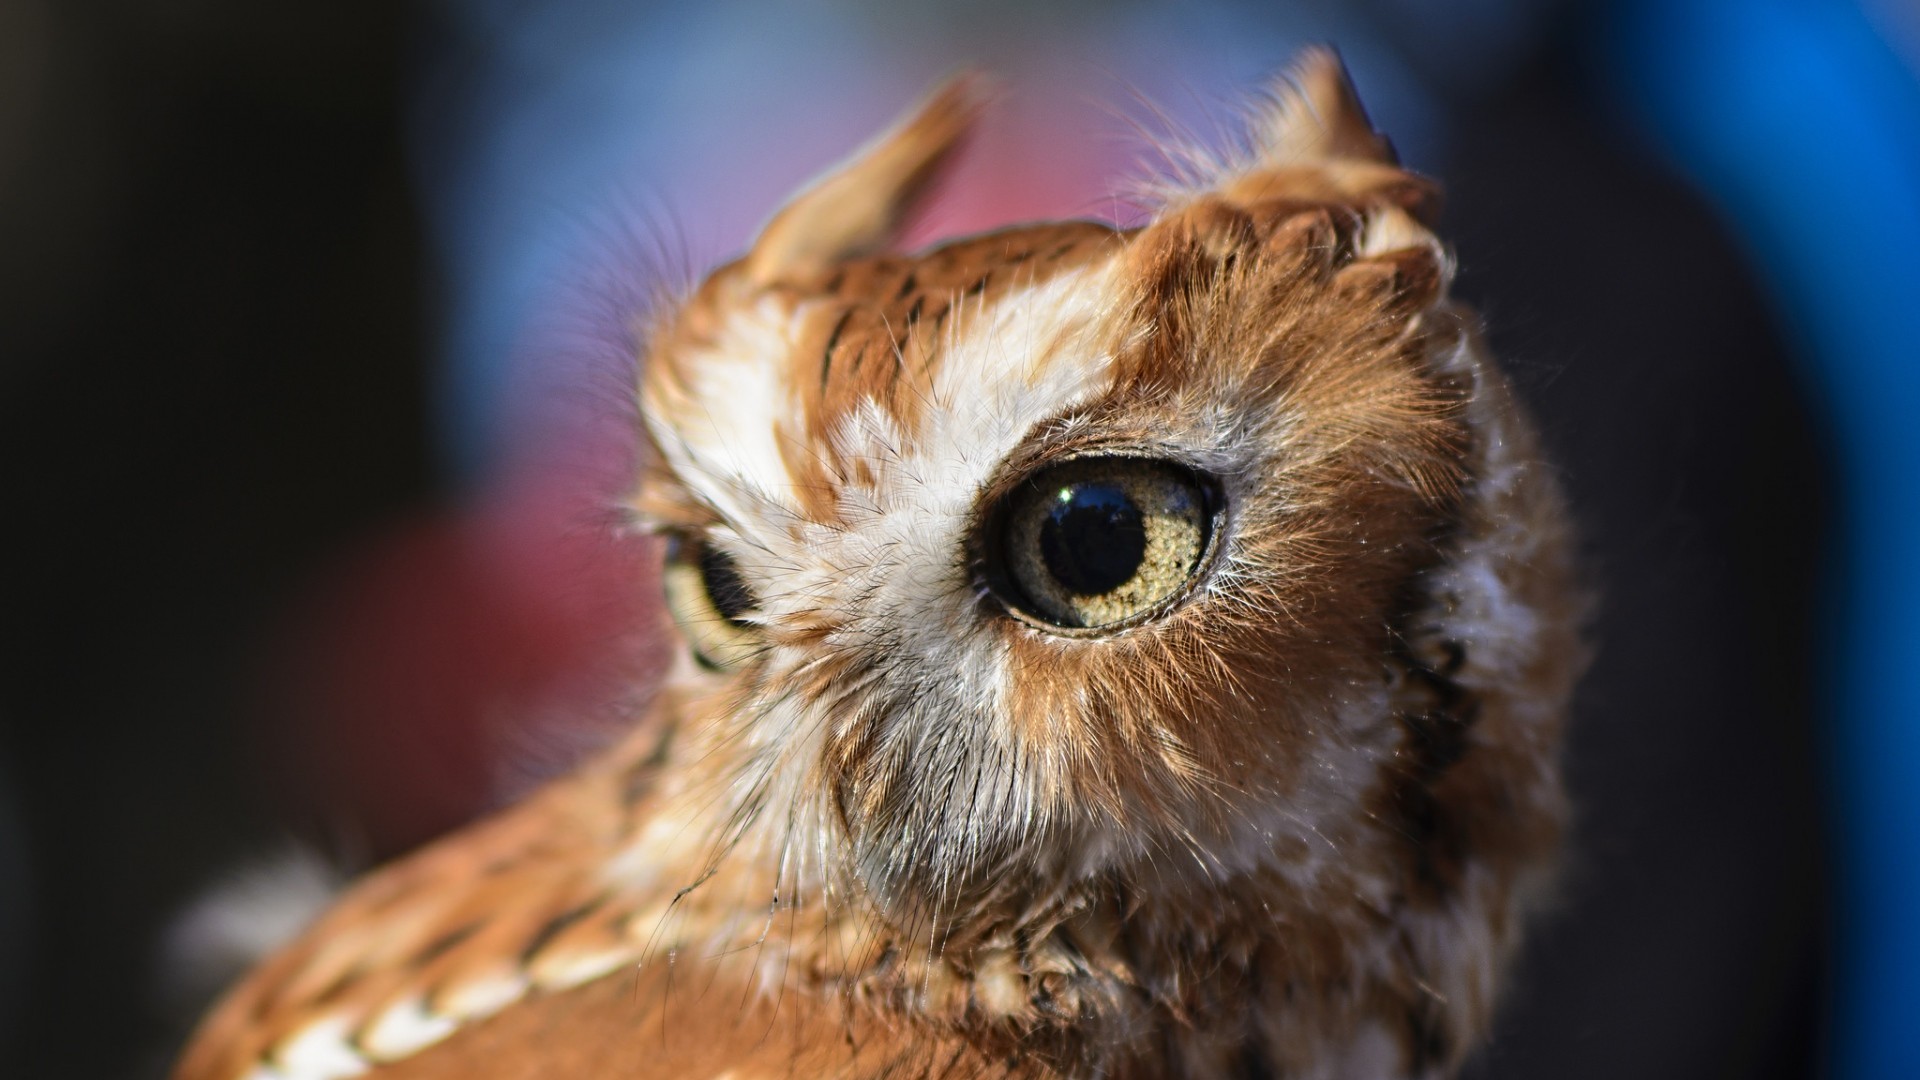 1920x1080 Wallpaper owl baby head close-up 